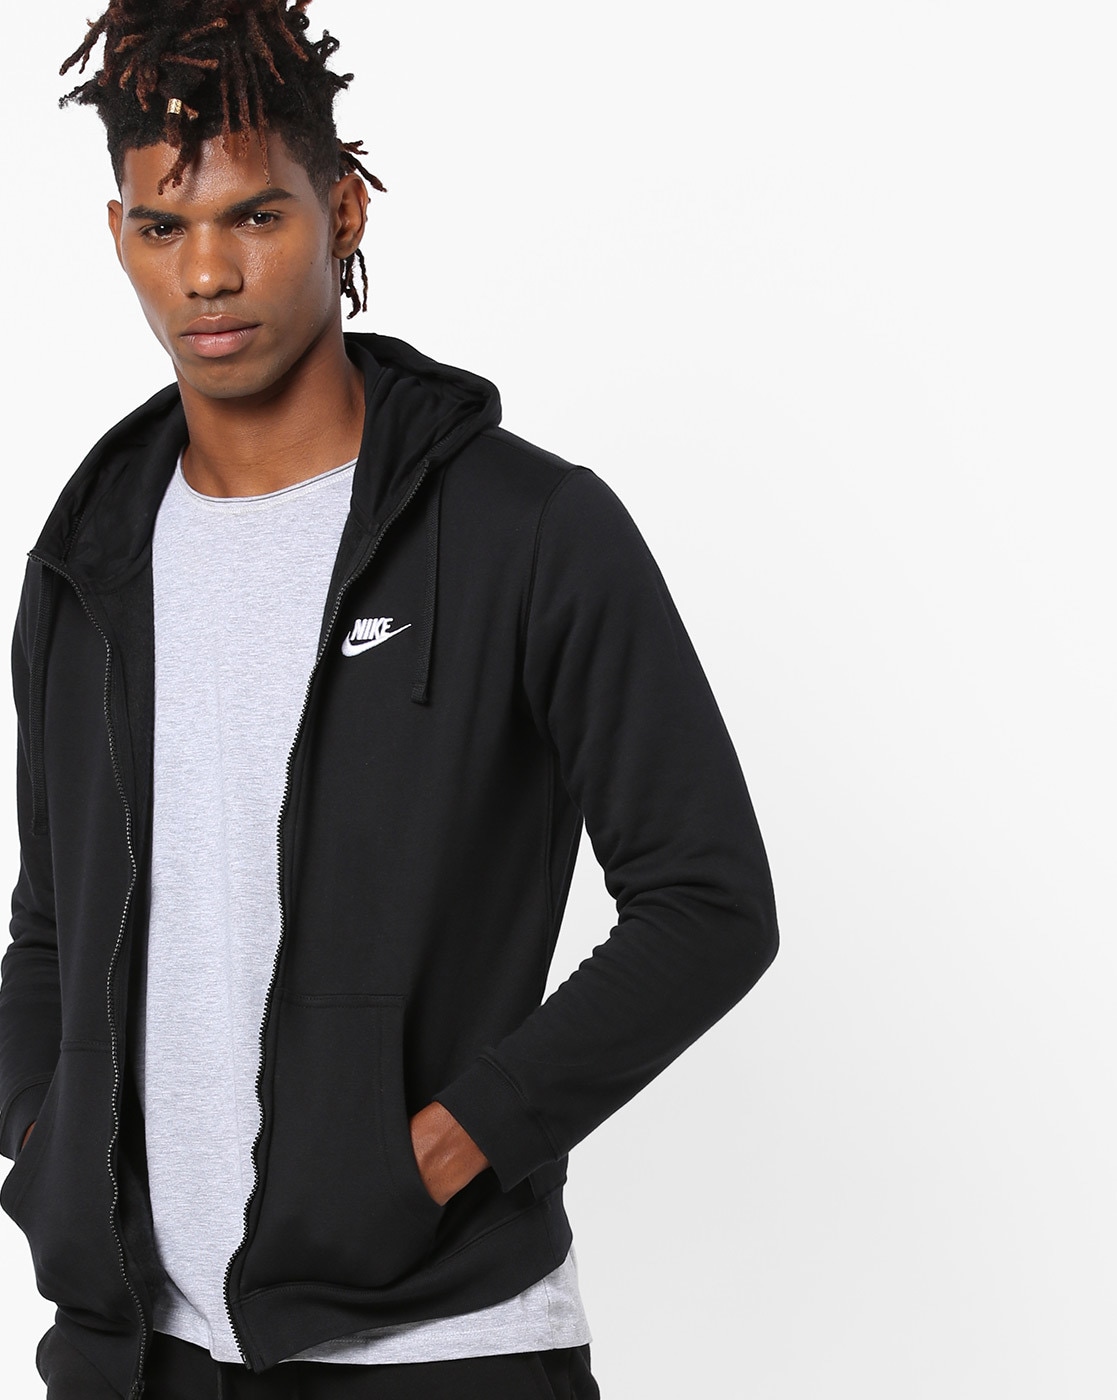 Buy Black Sweatshirt Hoodies For Men By Nike Online Ajio Com [ 1400 x 1117 Pixel ]